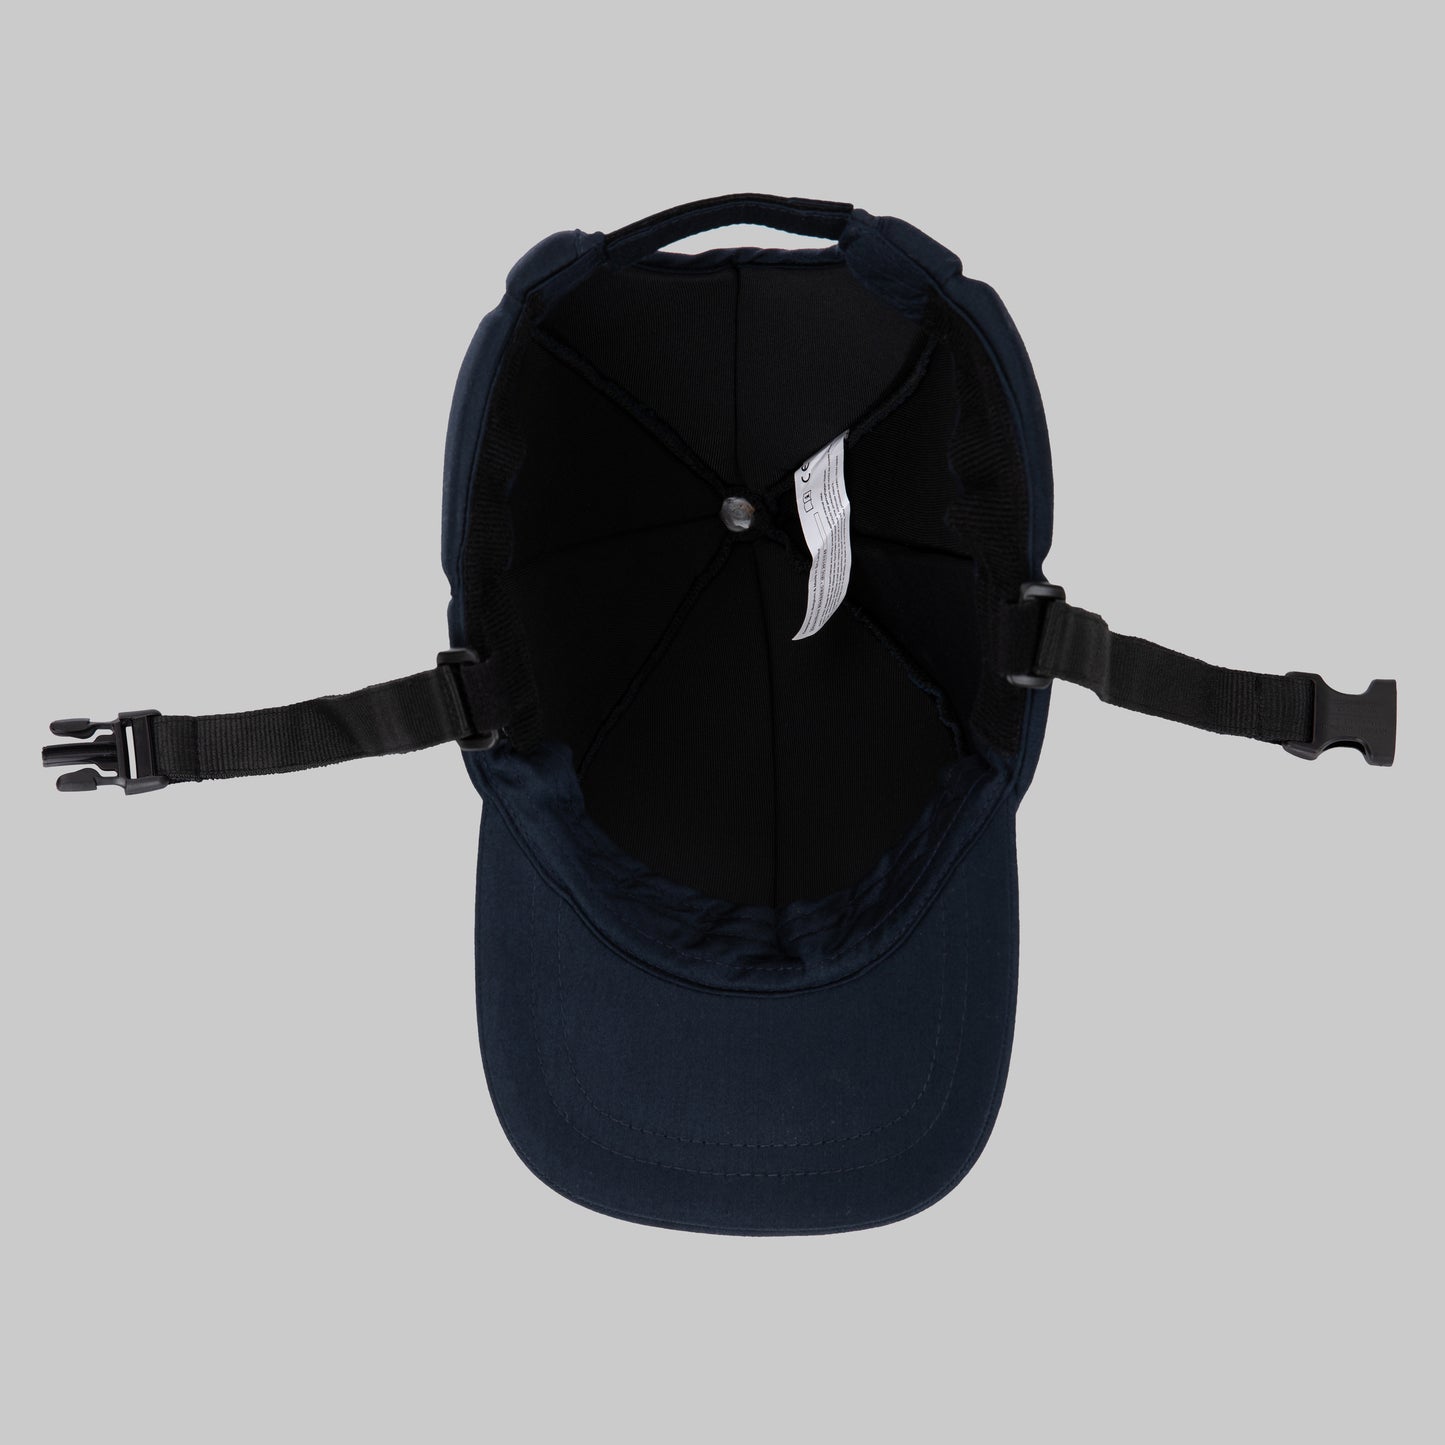 Ribcap Helmet - Baseball Cap